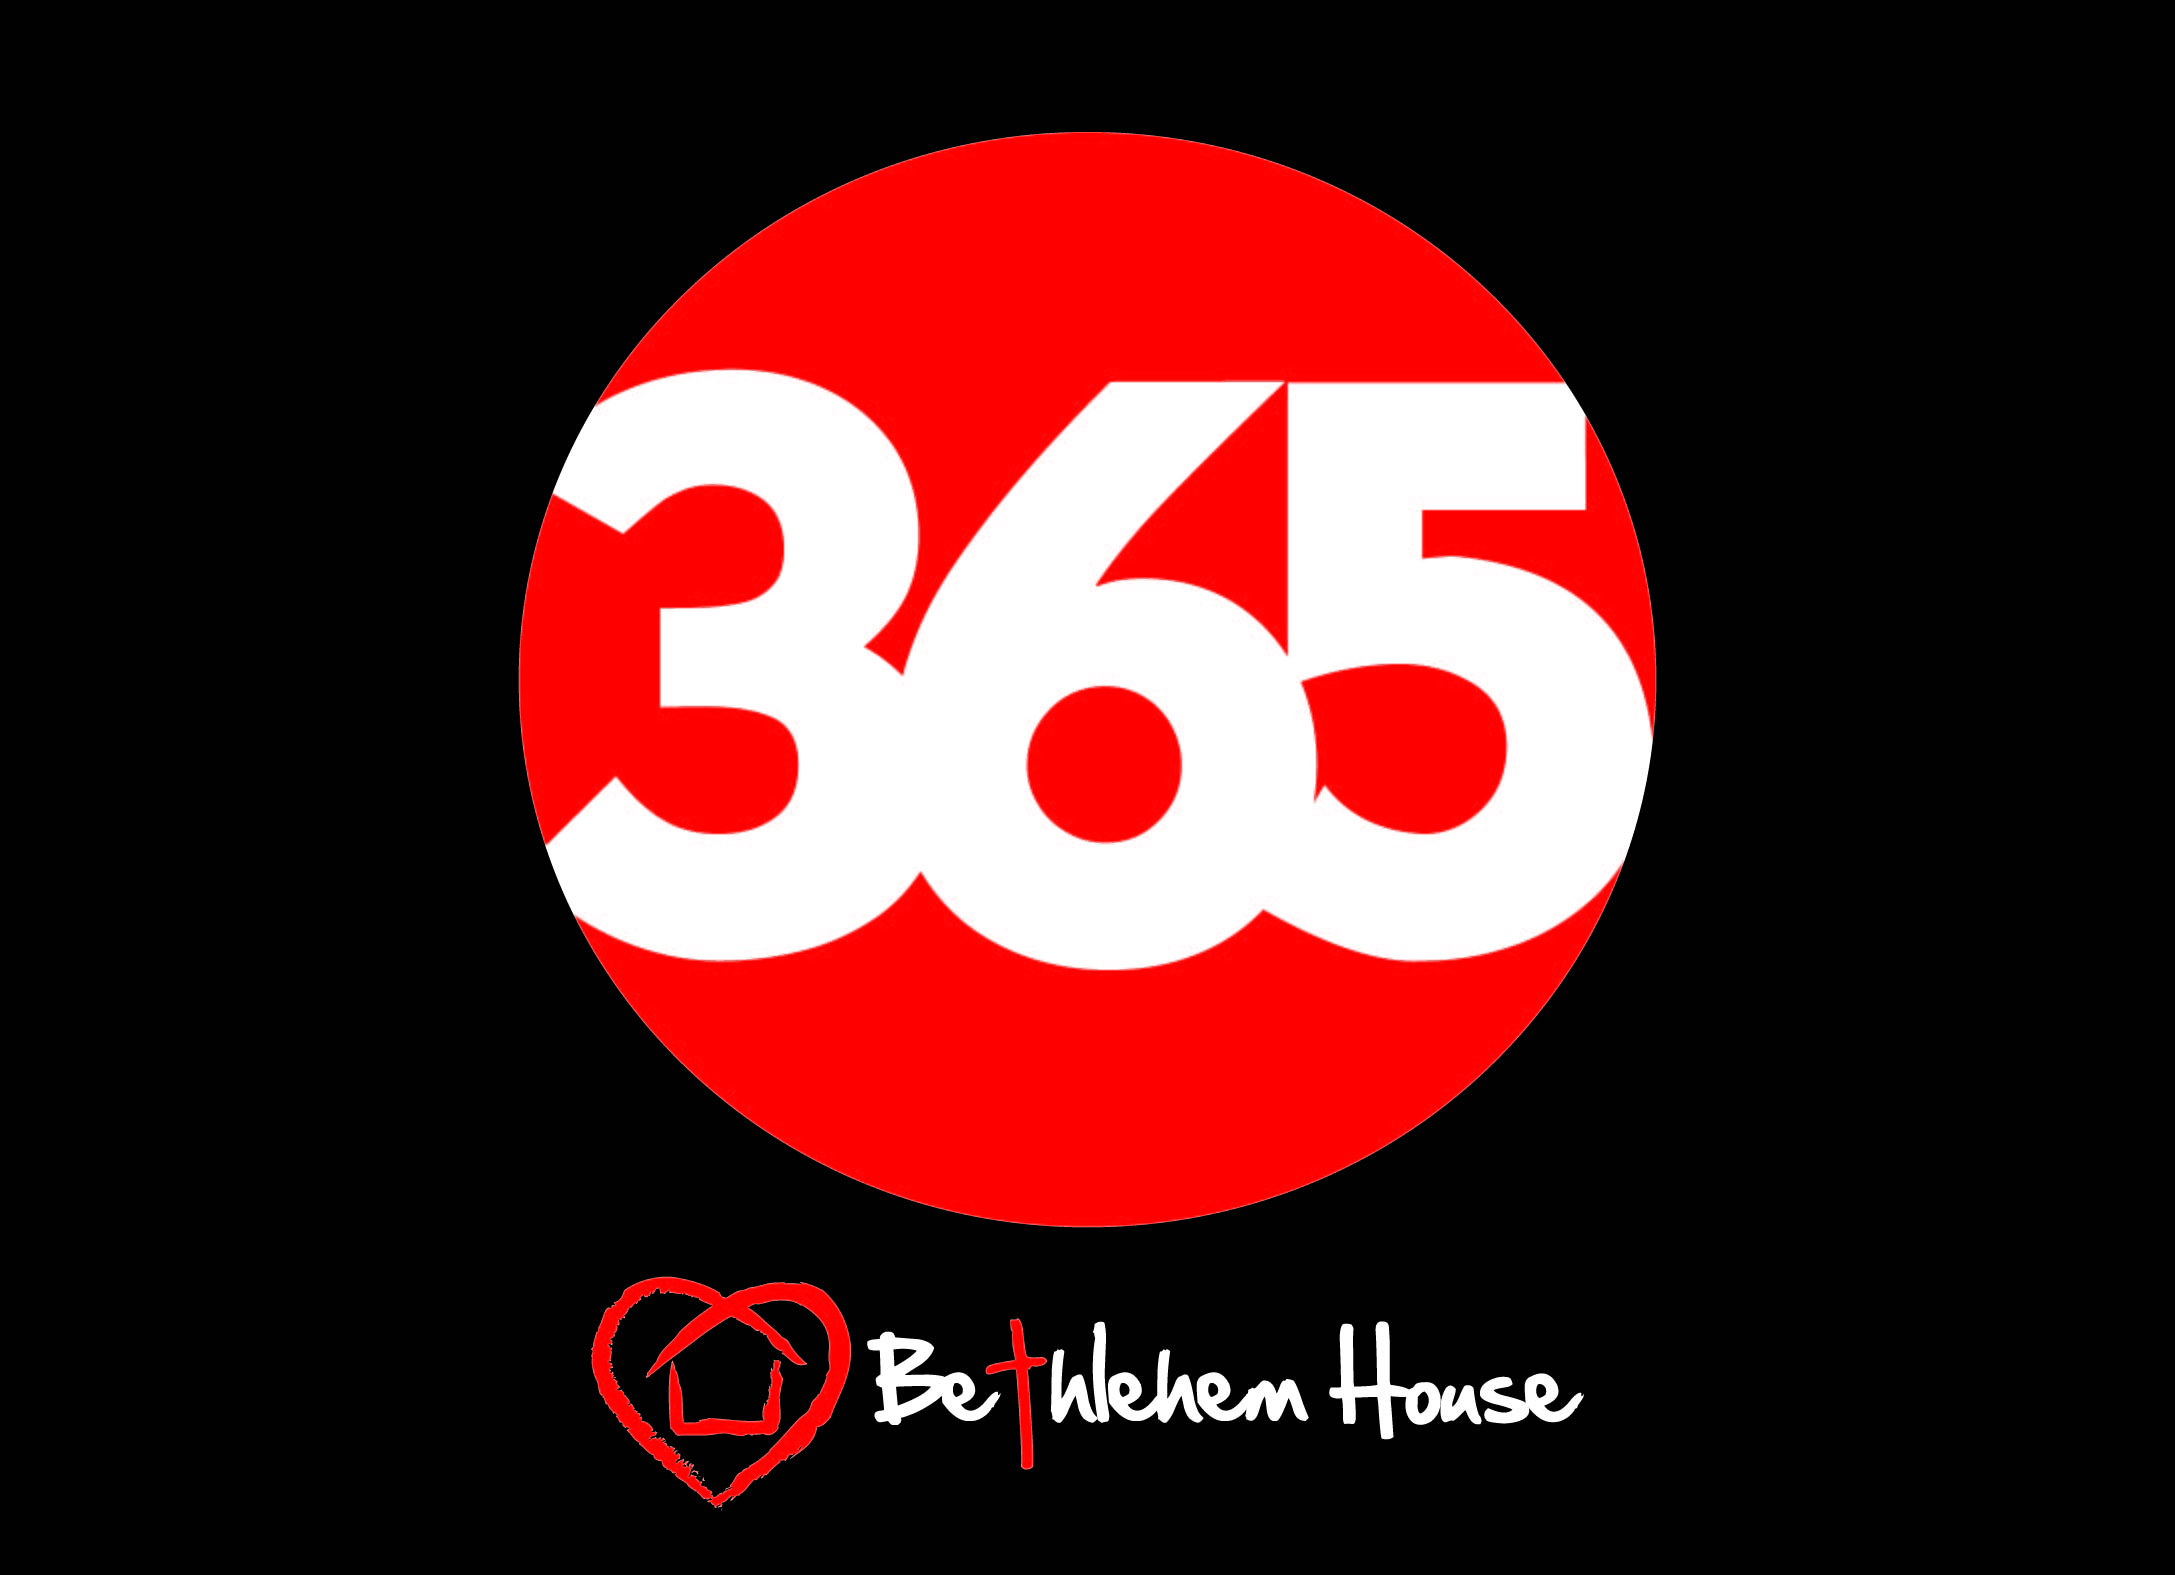 Bethlehem House logo